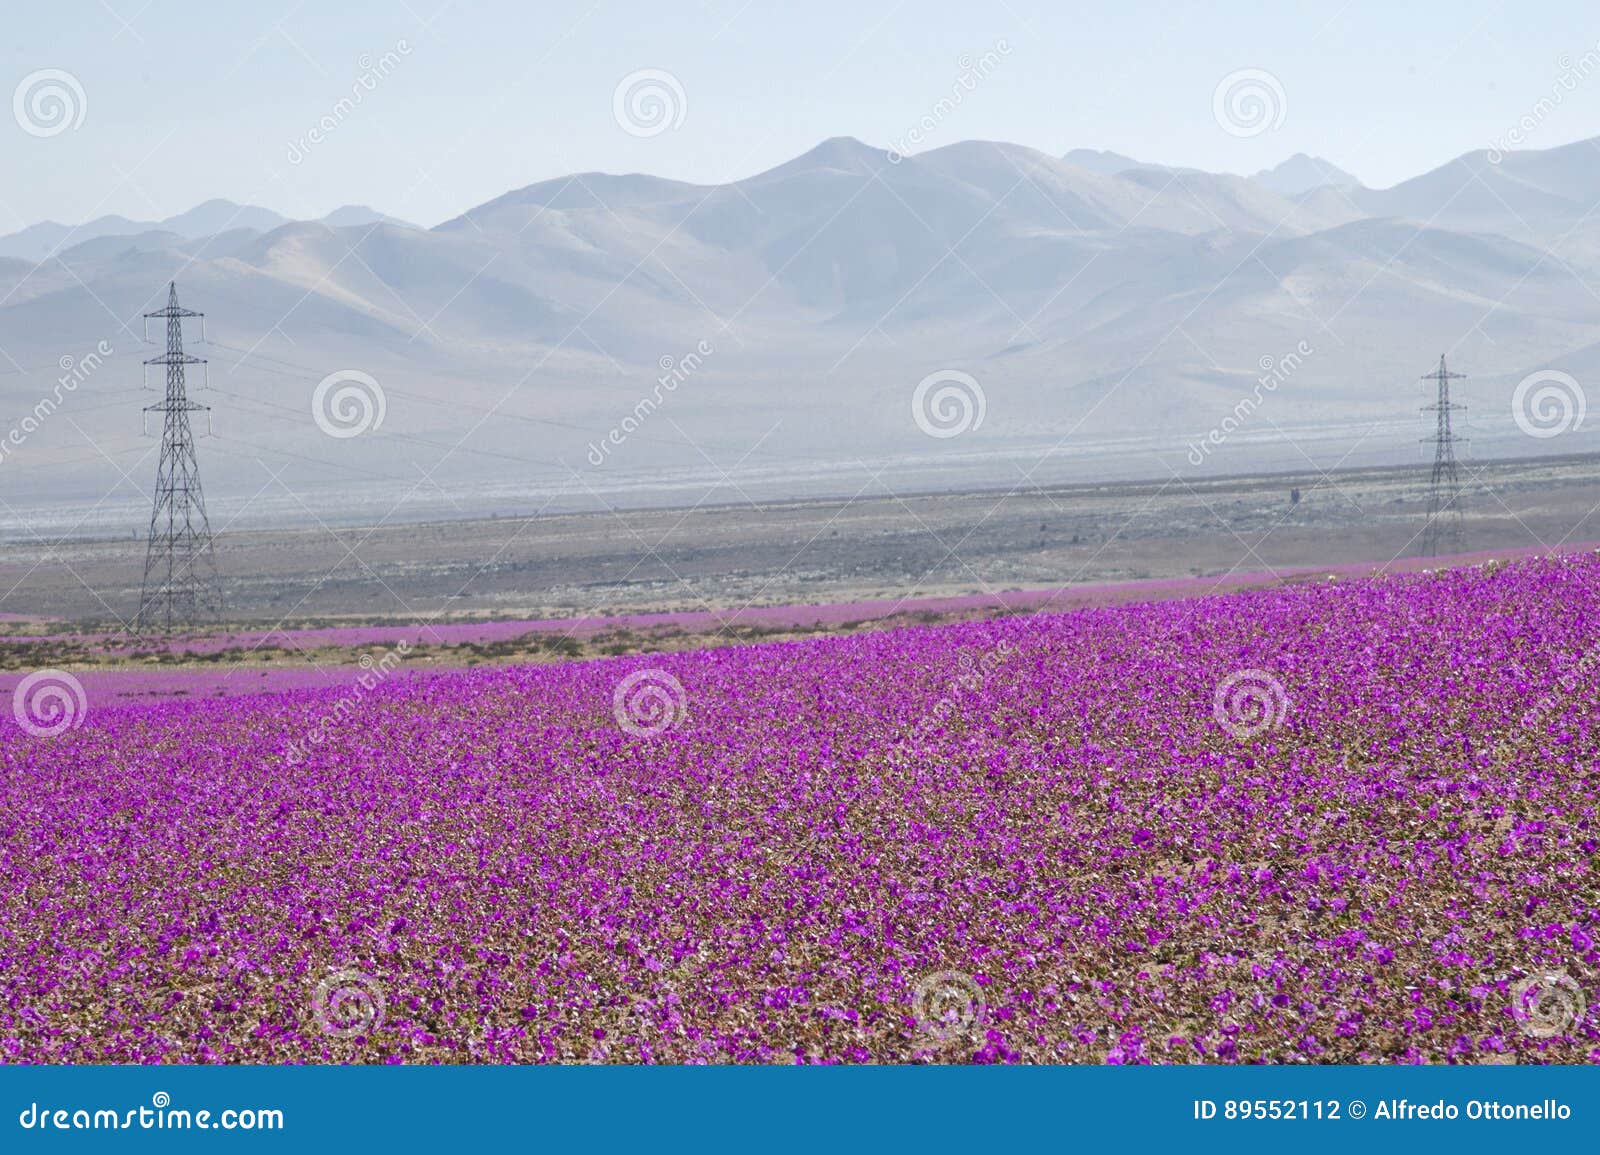 flowers in the atacama desert, chile.